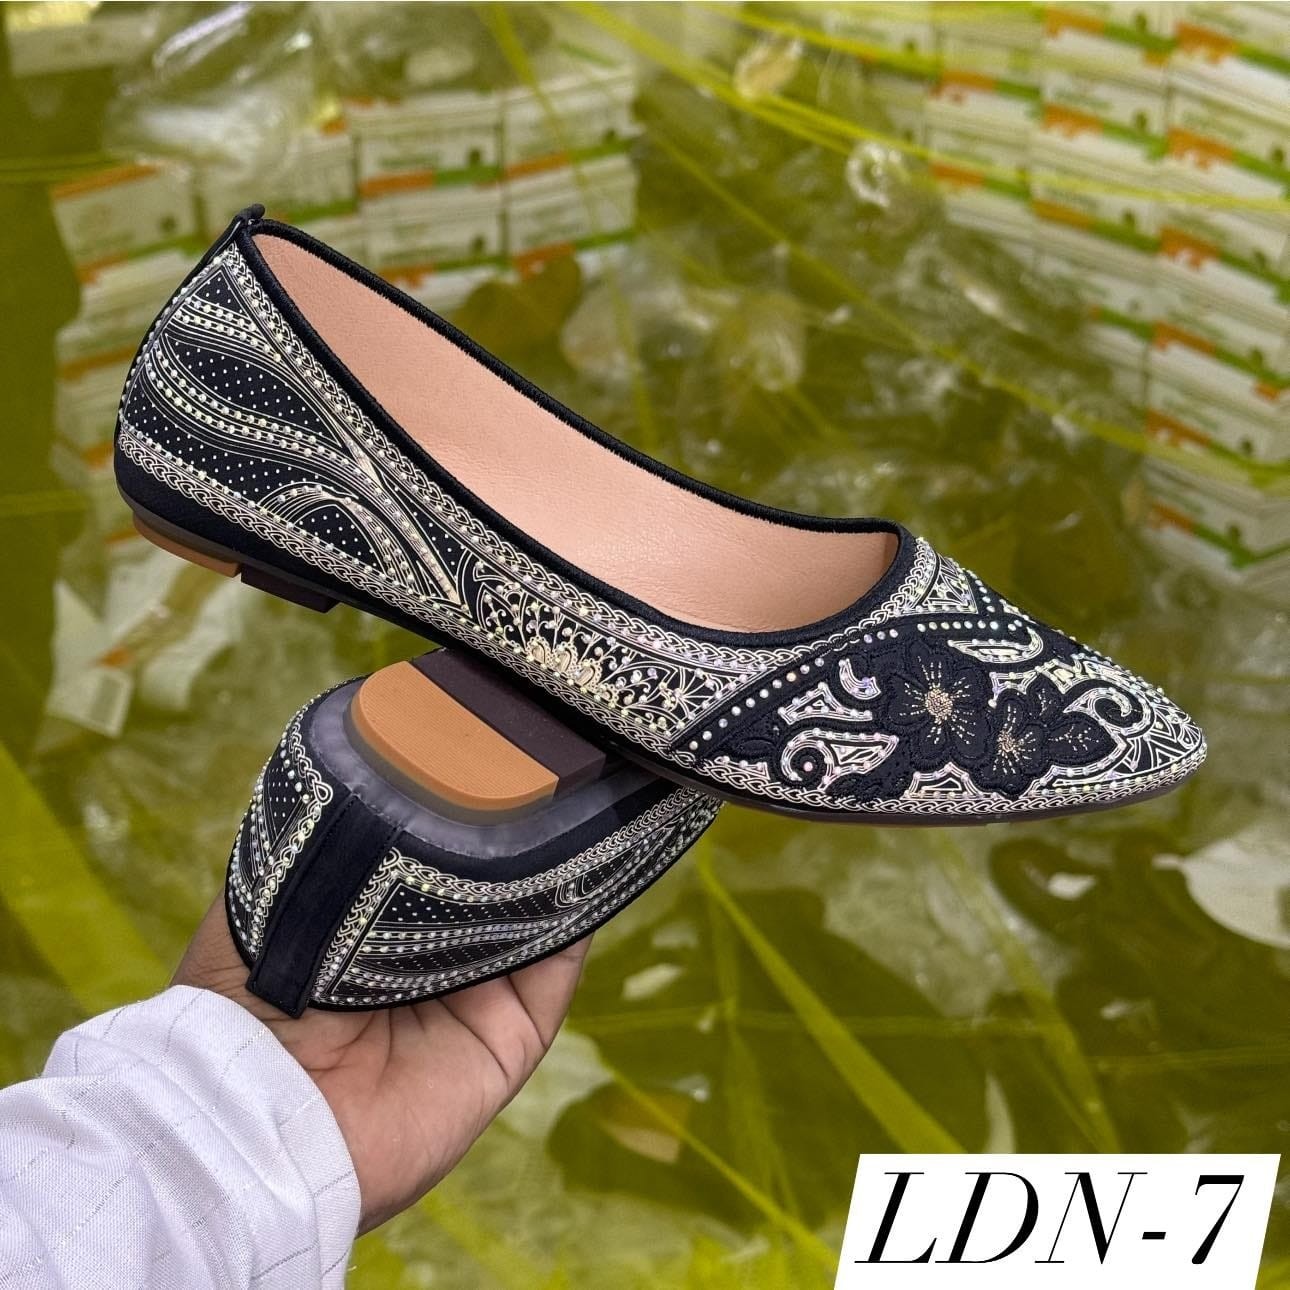 Exclusive ladies shoe (LDN 7)